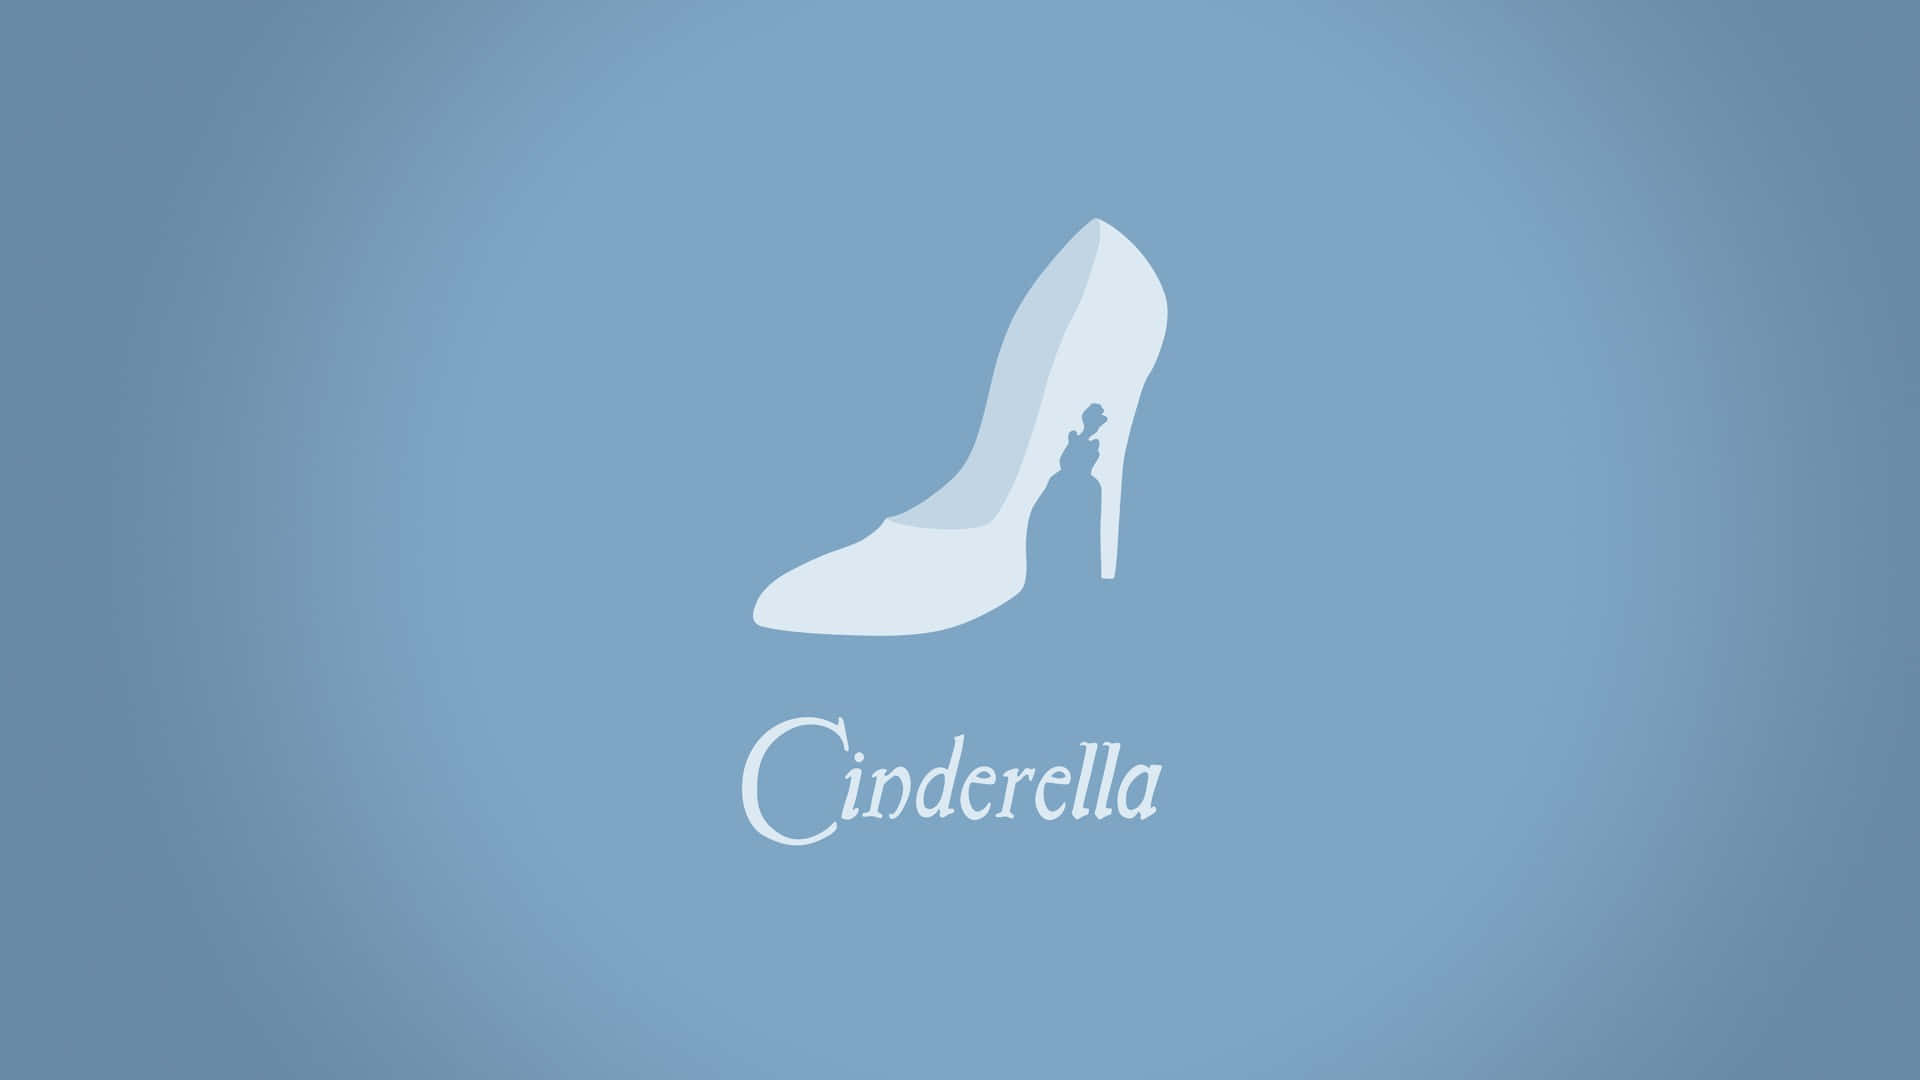 cinderella shoe icon on blue background